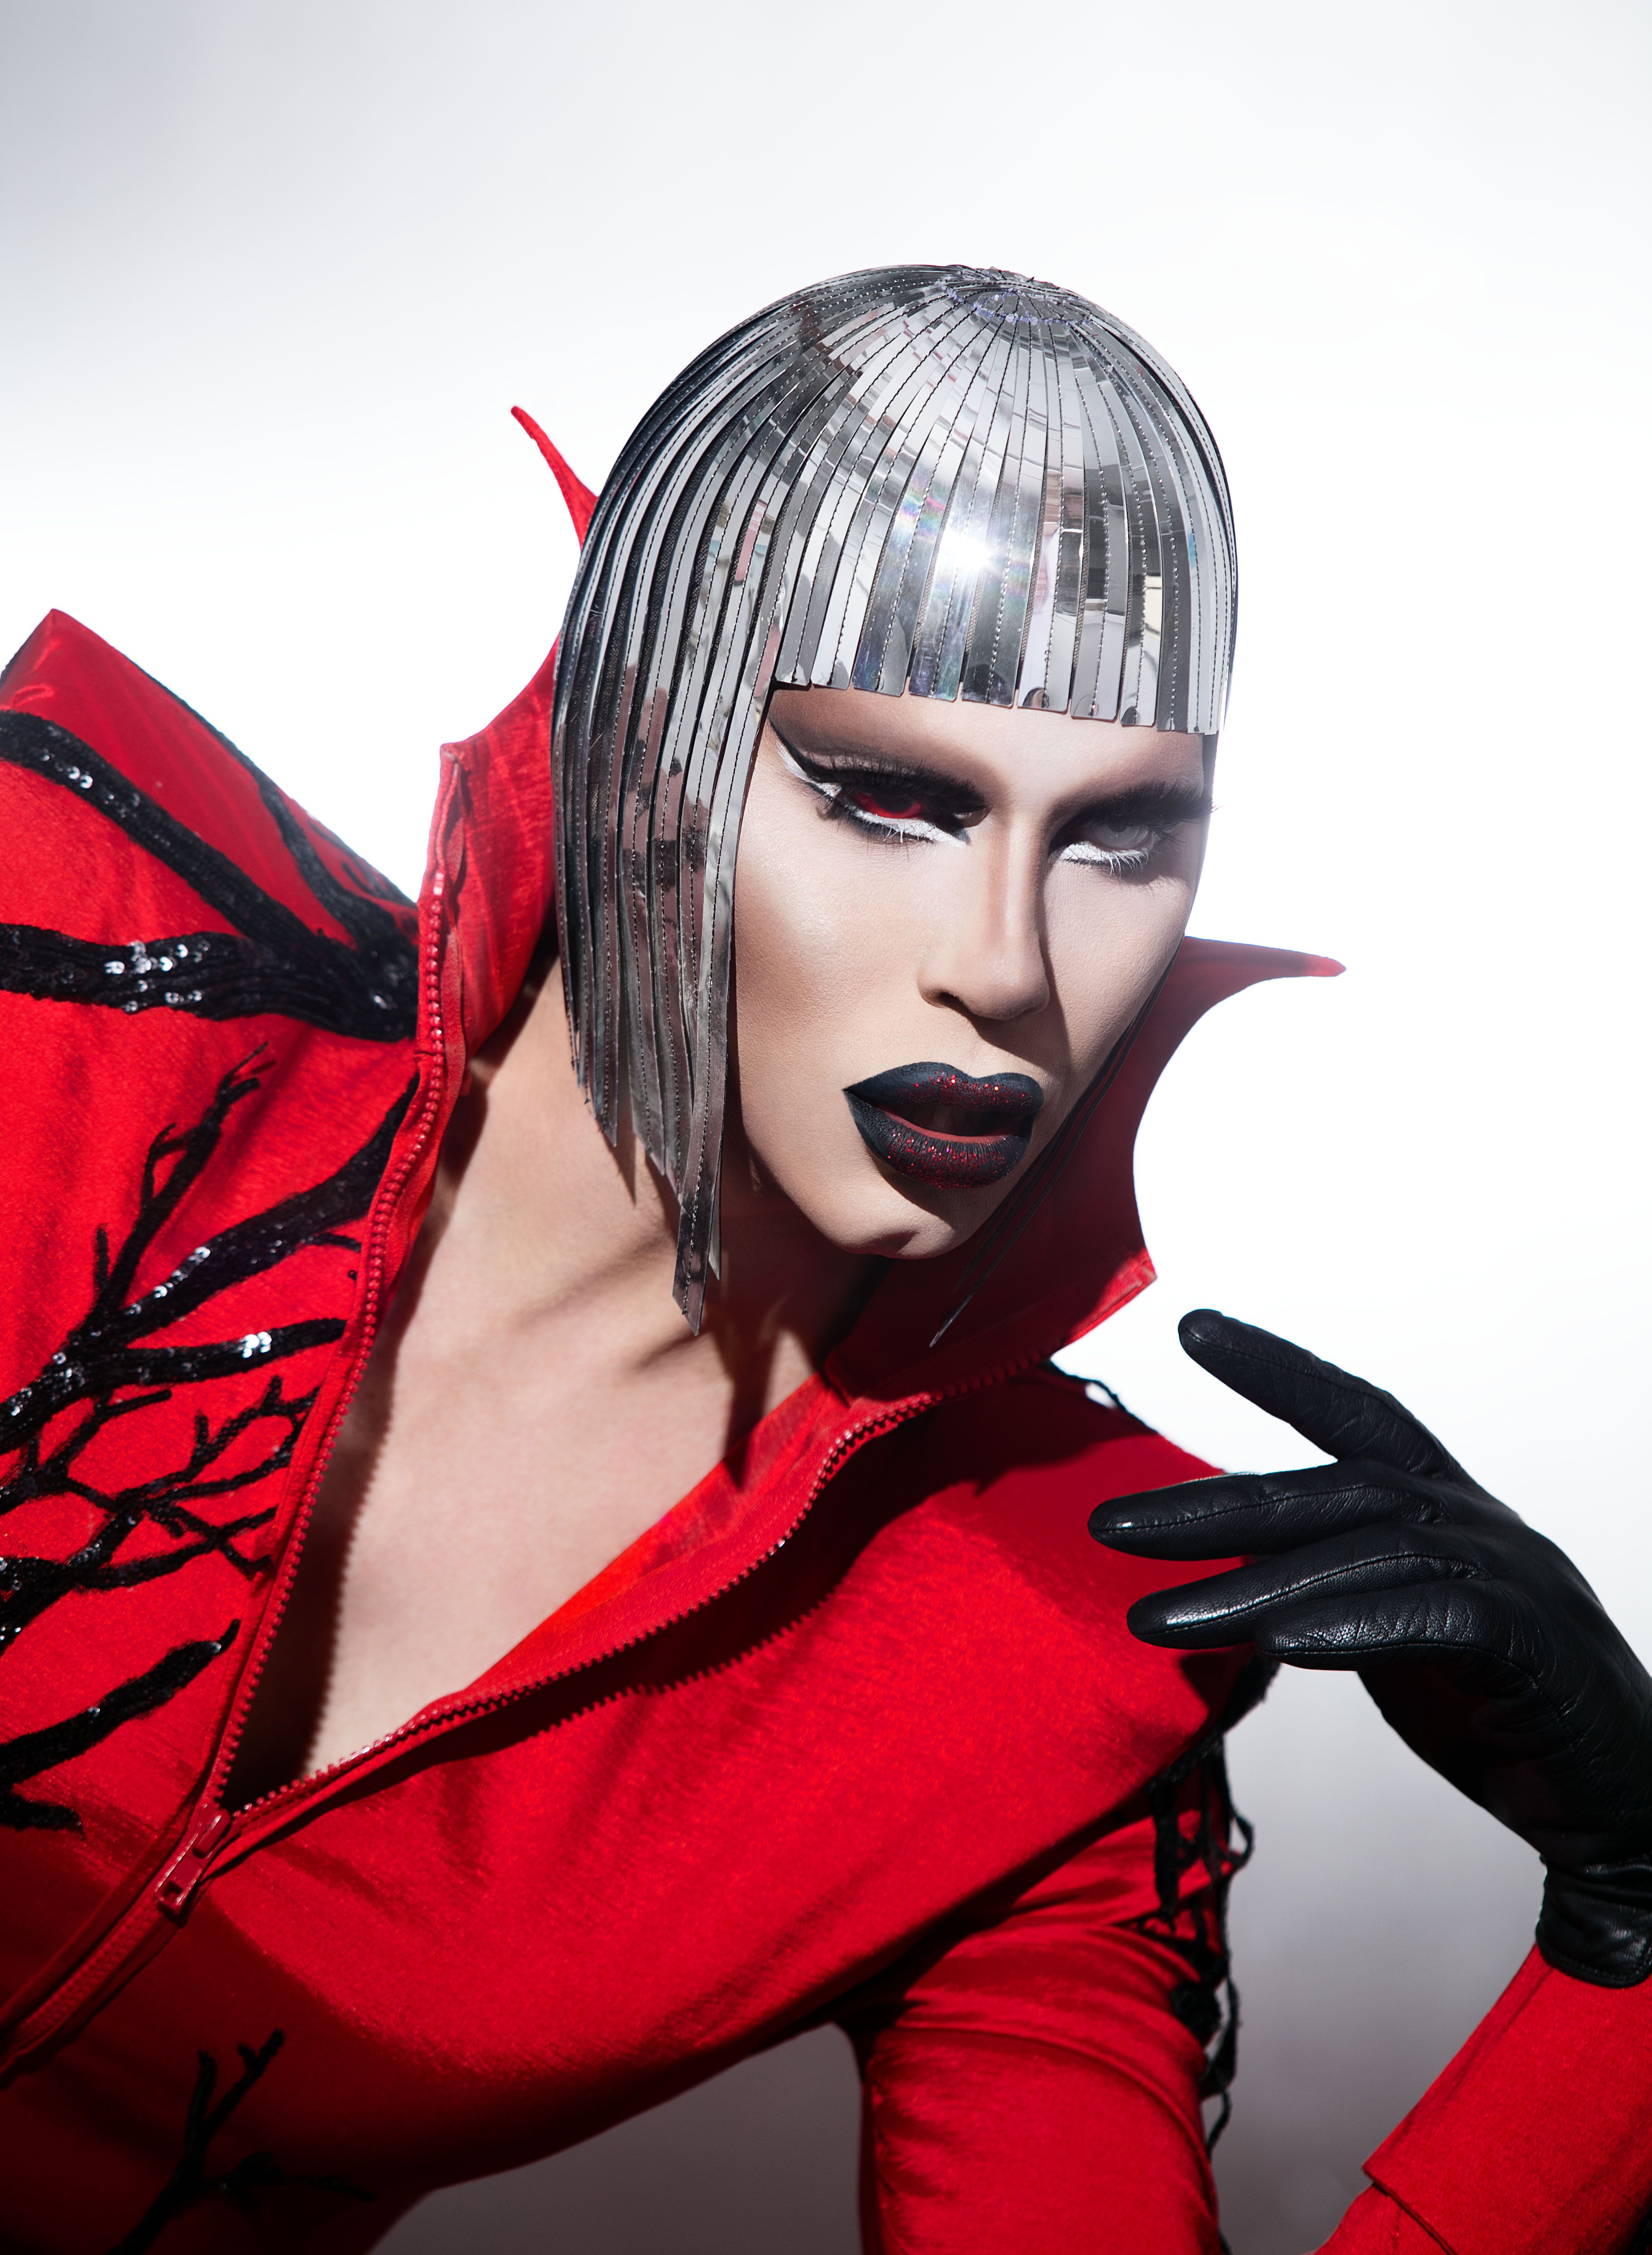 Watch Drag Queen Sharon Needles Completely Transform Herself